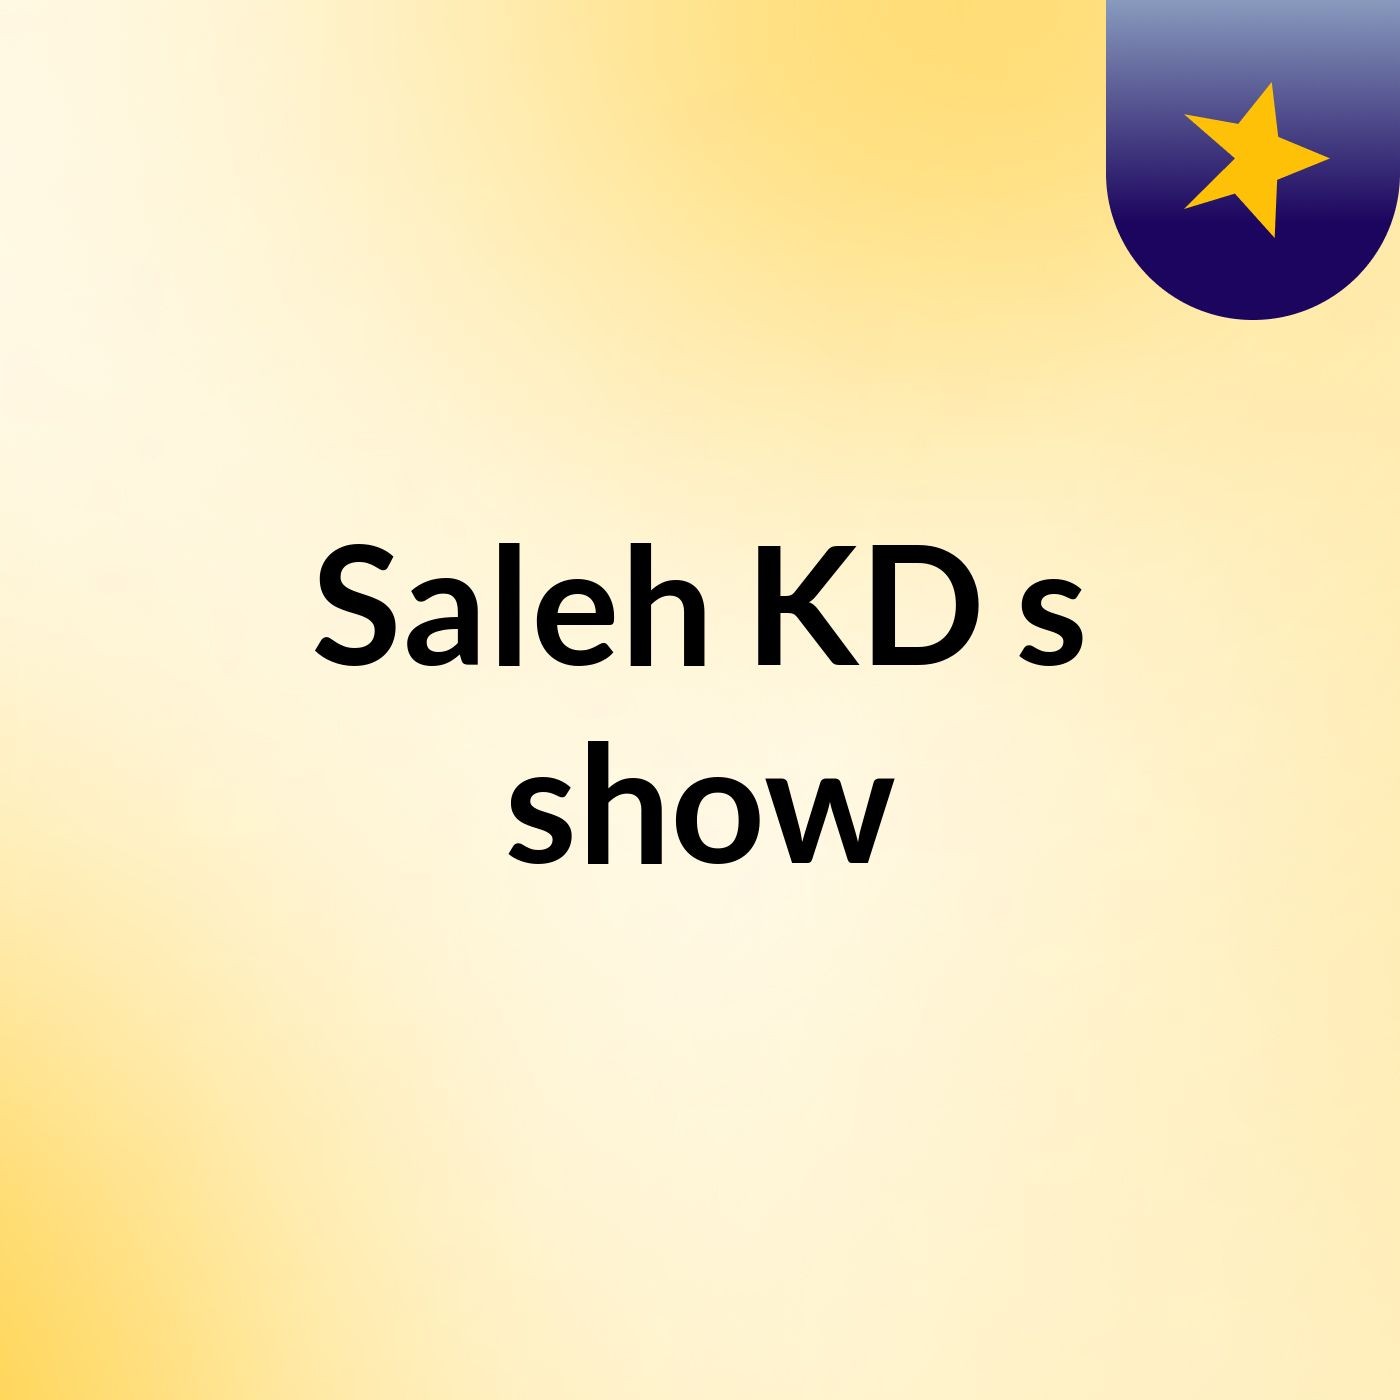 Saleh KD's show